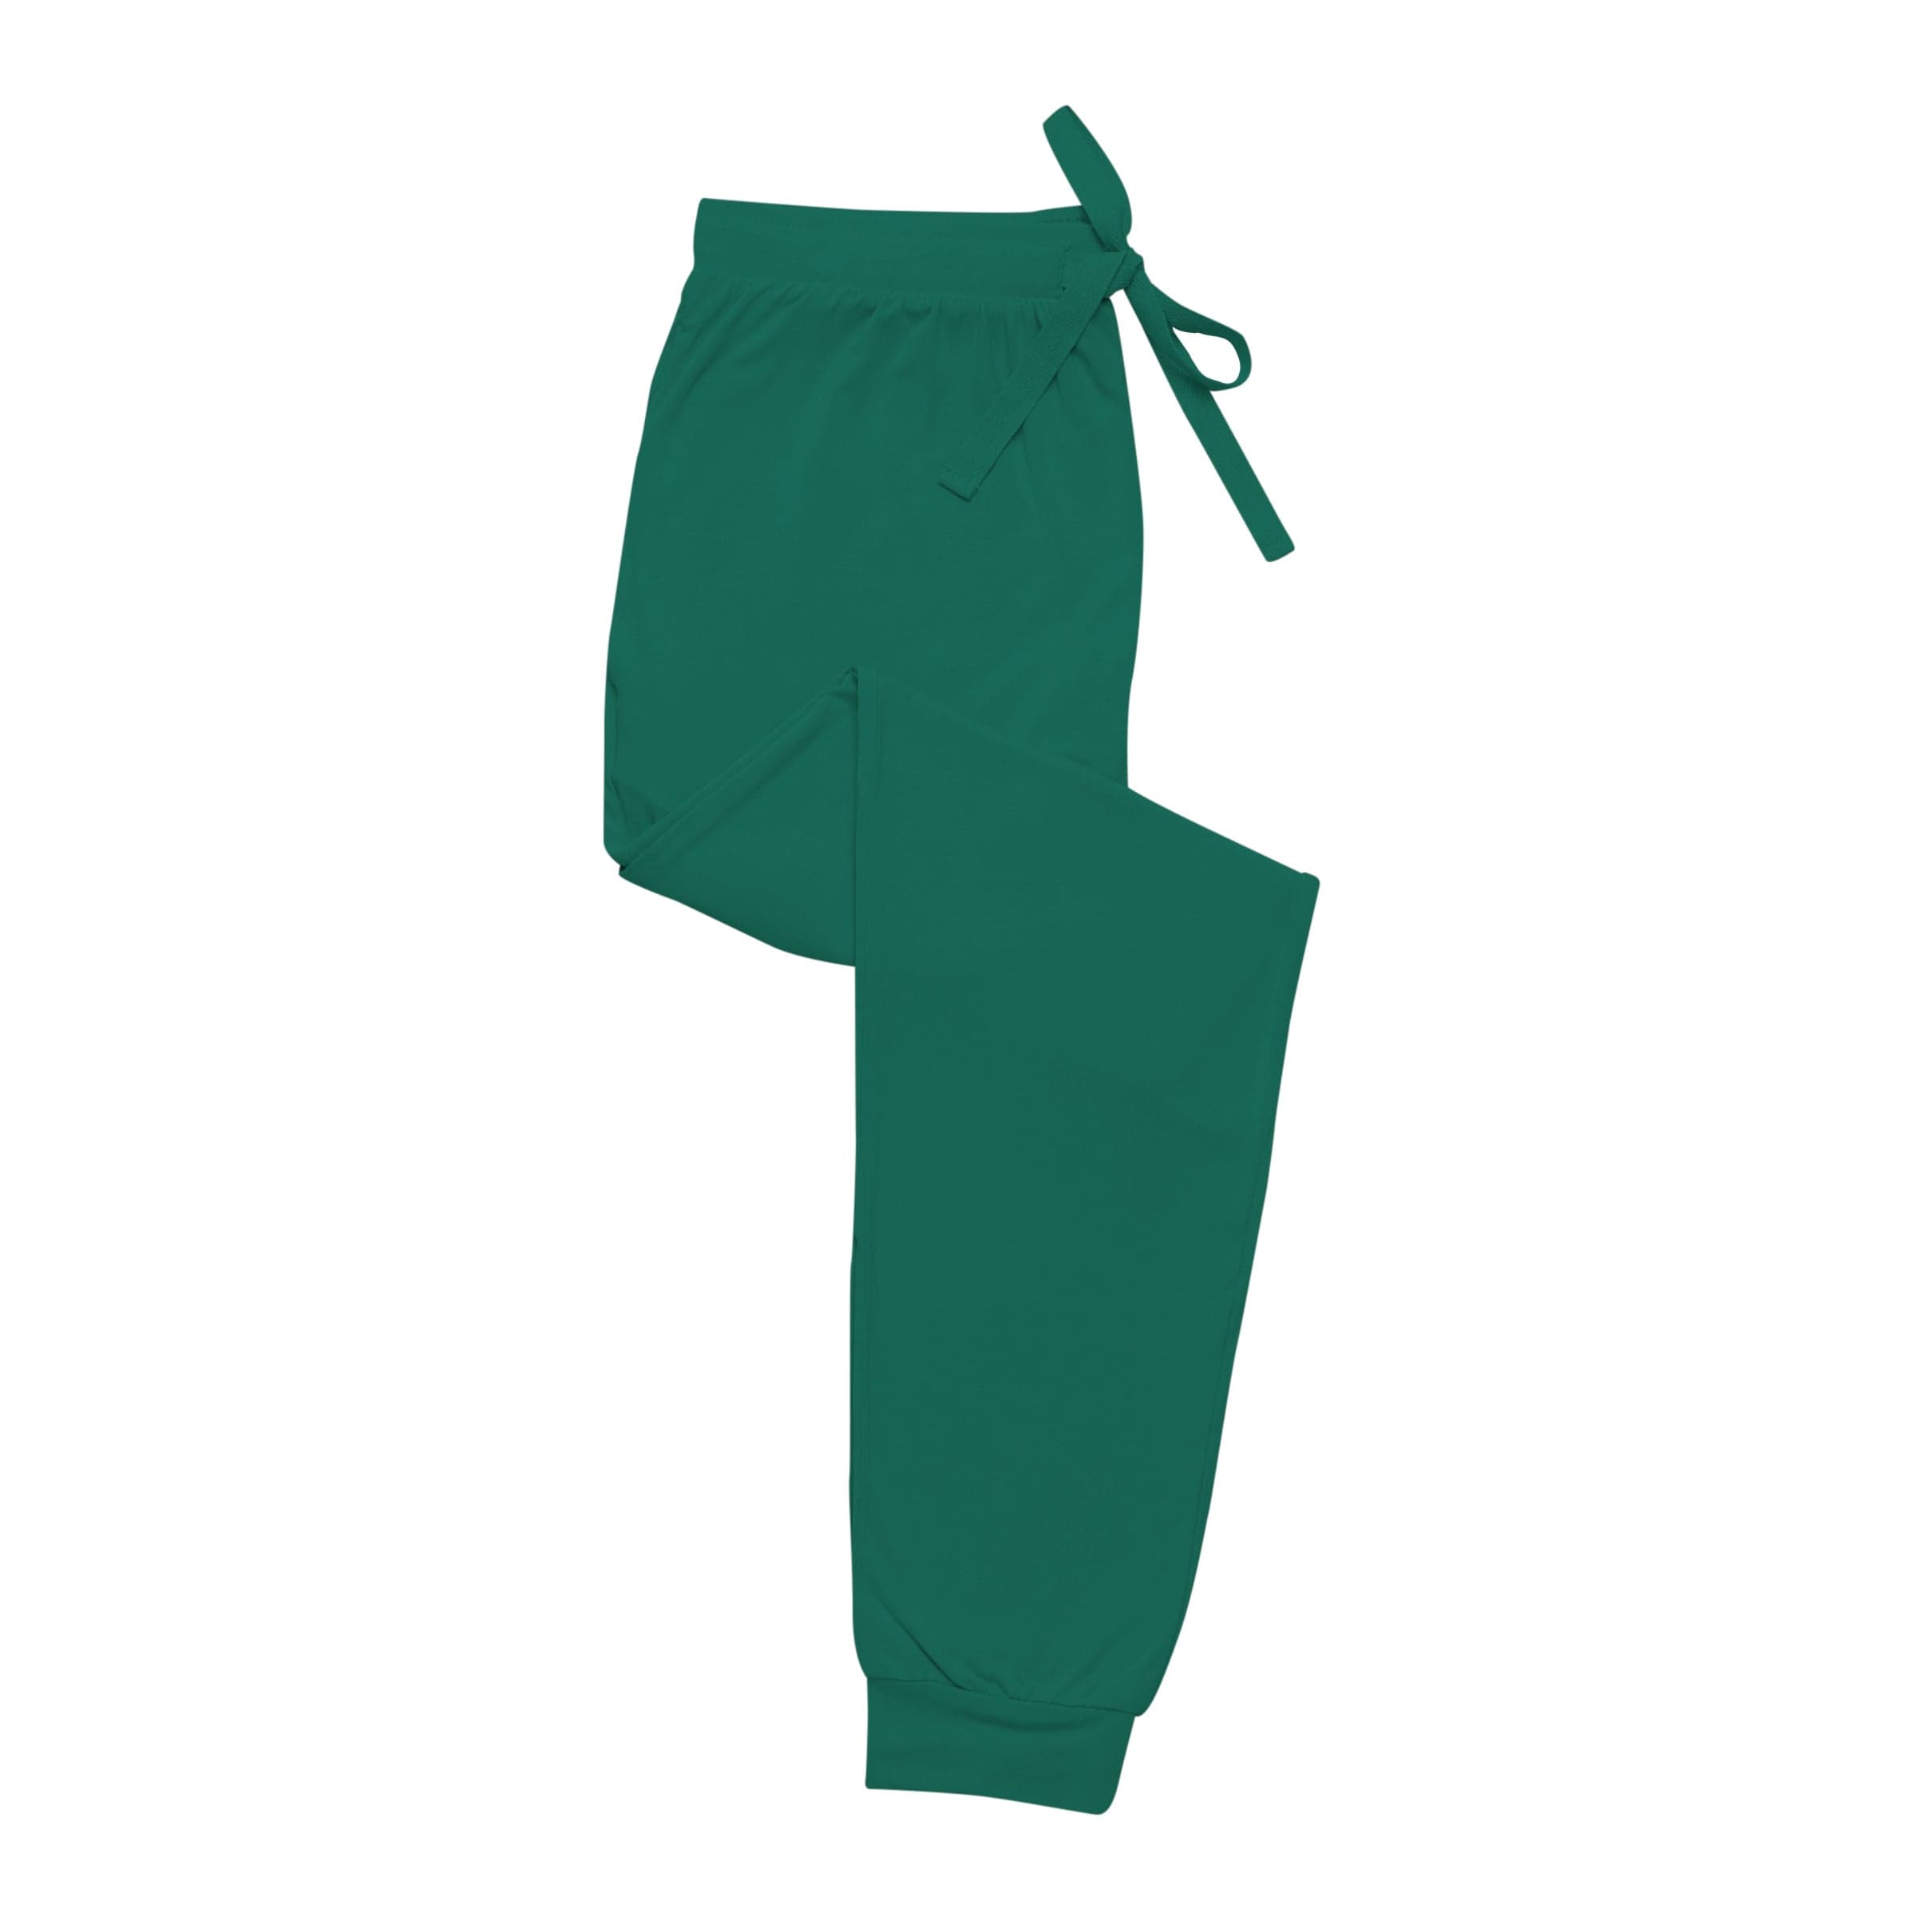 Women's Jogger Pants in Emerald  Women jogger pants, Joggers